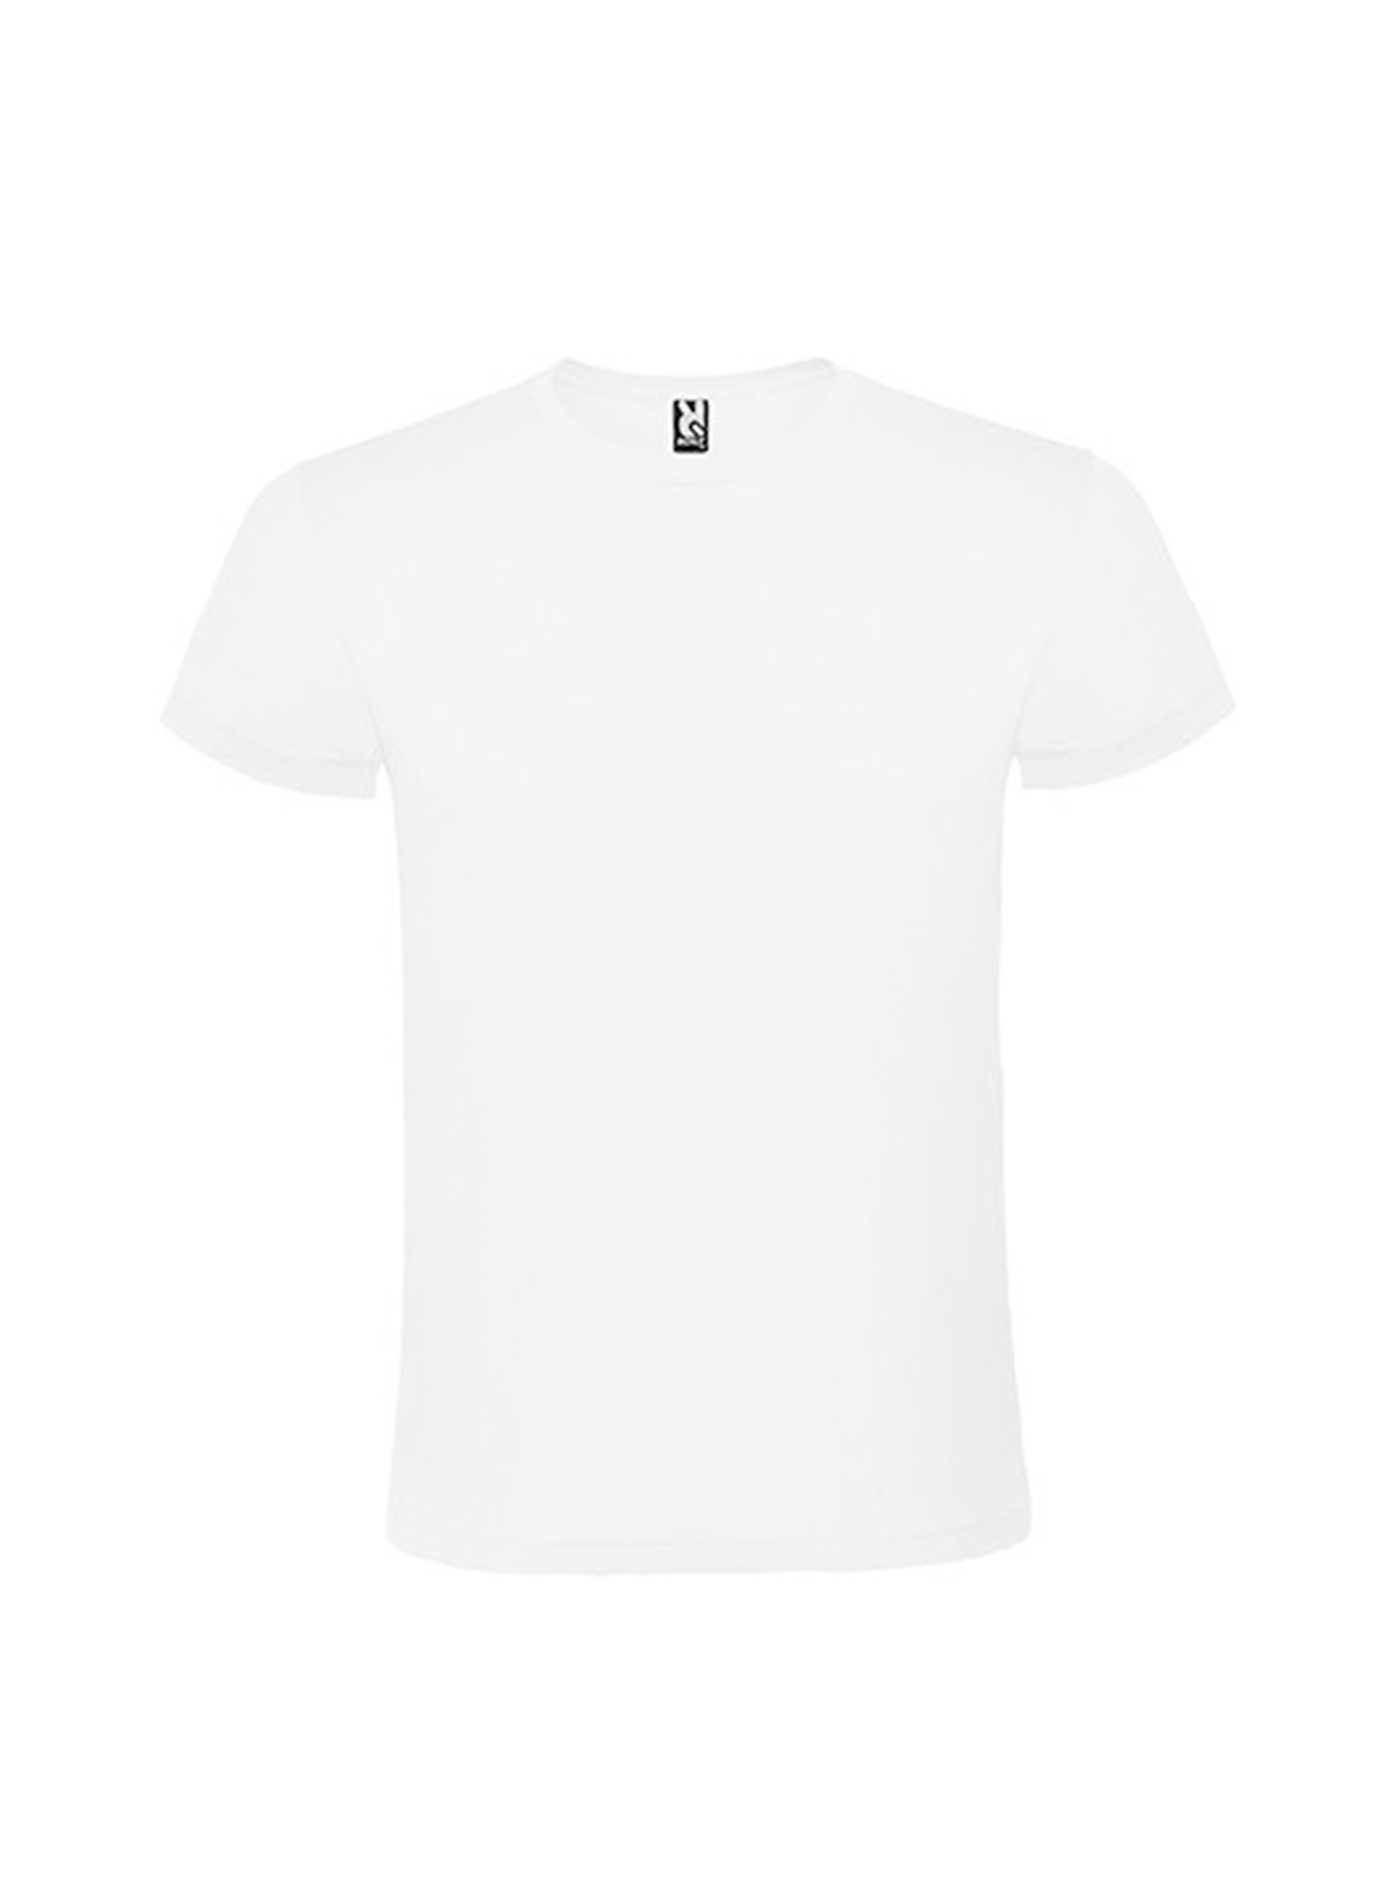 Pánské tričko Roly Atomic - Bílá XL